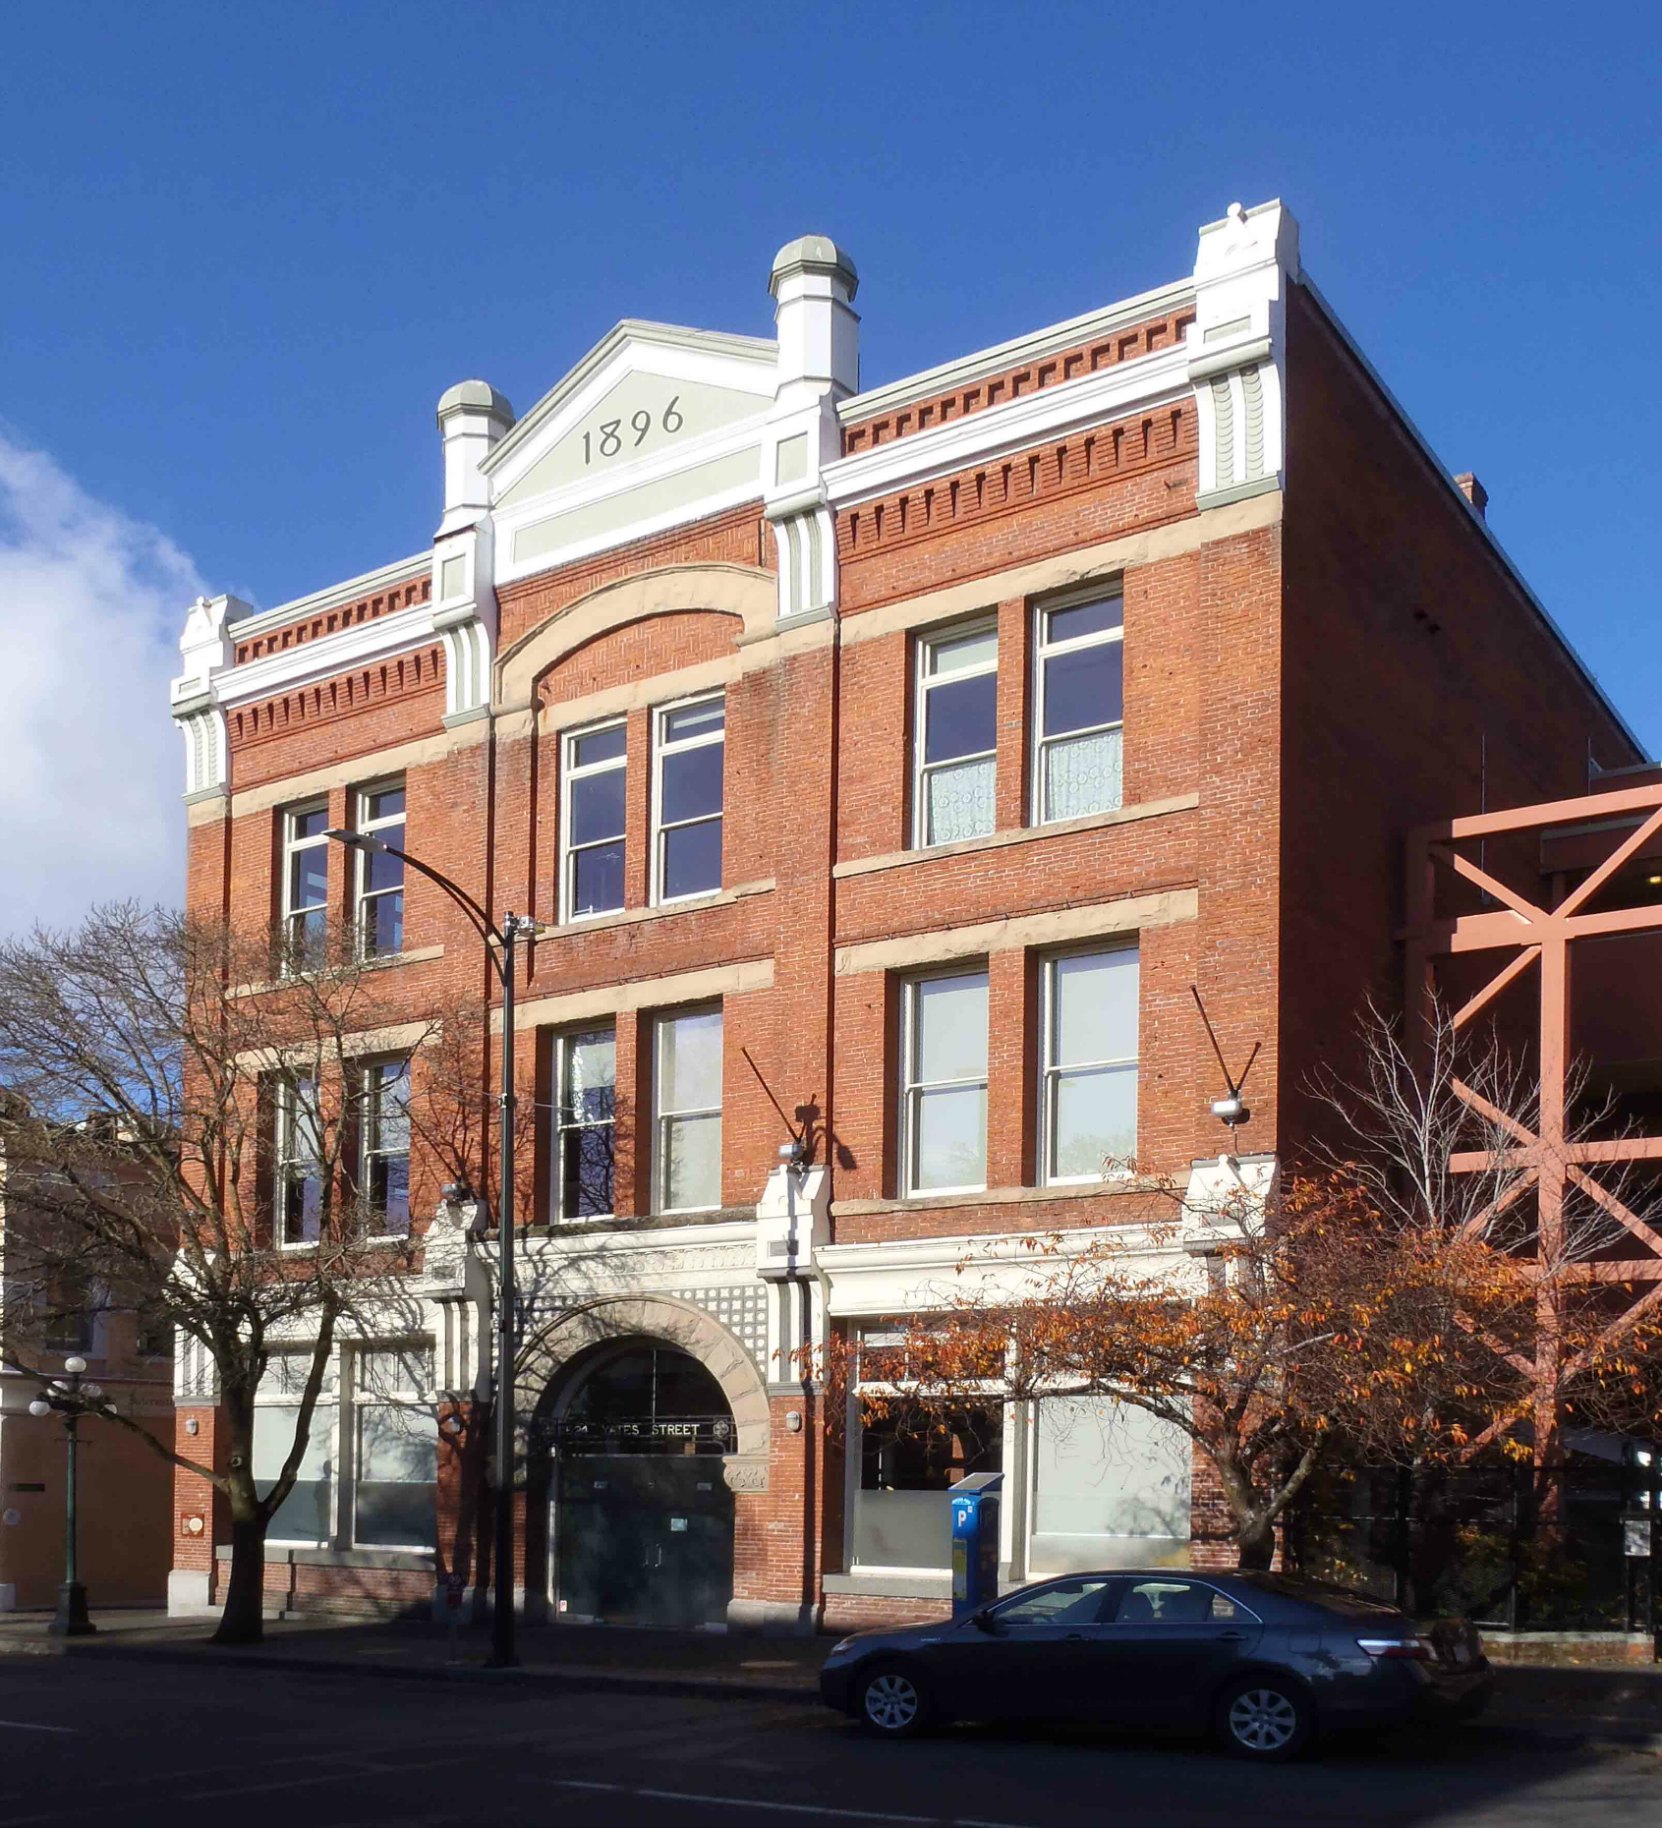 Leiser Building, 524 Yates Street. Built in 1896 as a warehouse for Simon Leiser. Architect: A.C. Ewart.